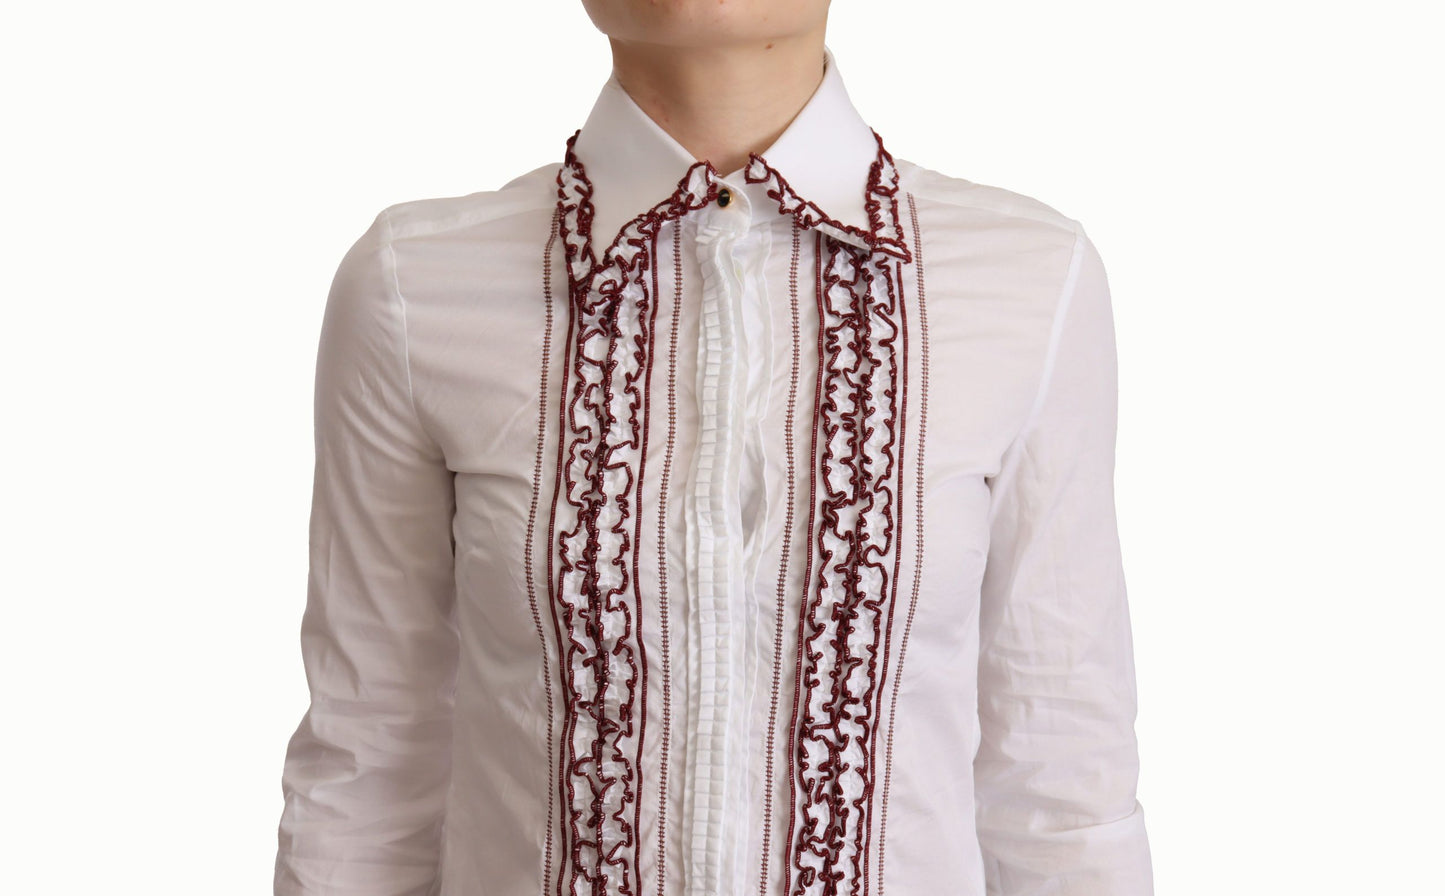 Dolce & Gabbana White Cotton Lace Long Sleeves Ruffle Collar Top Shirt